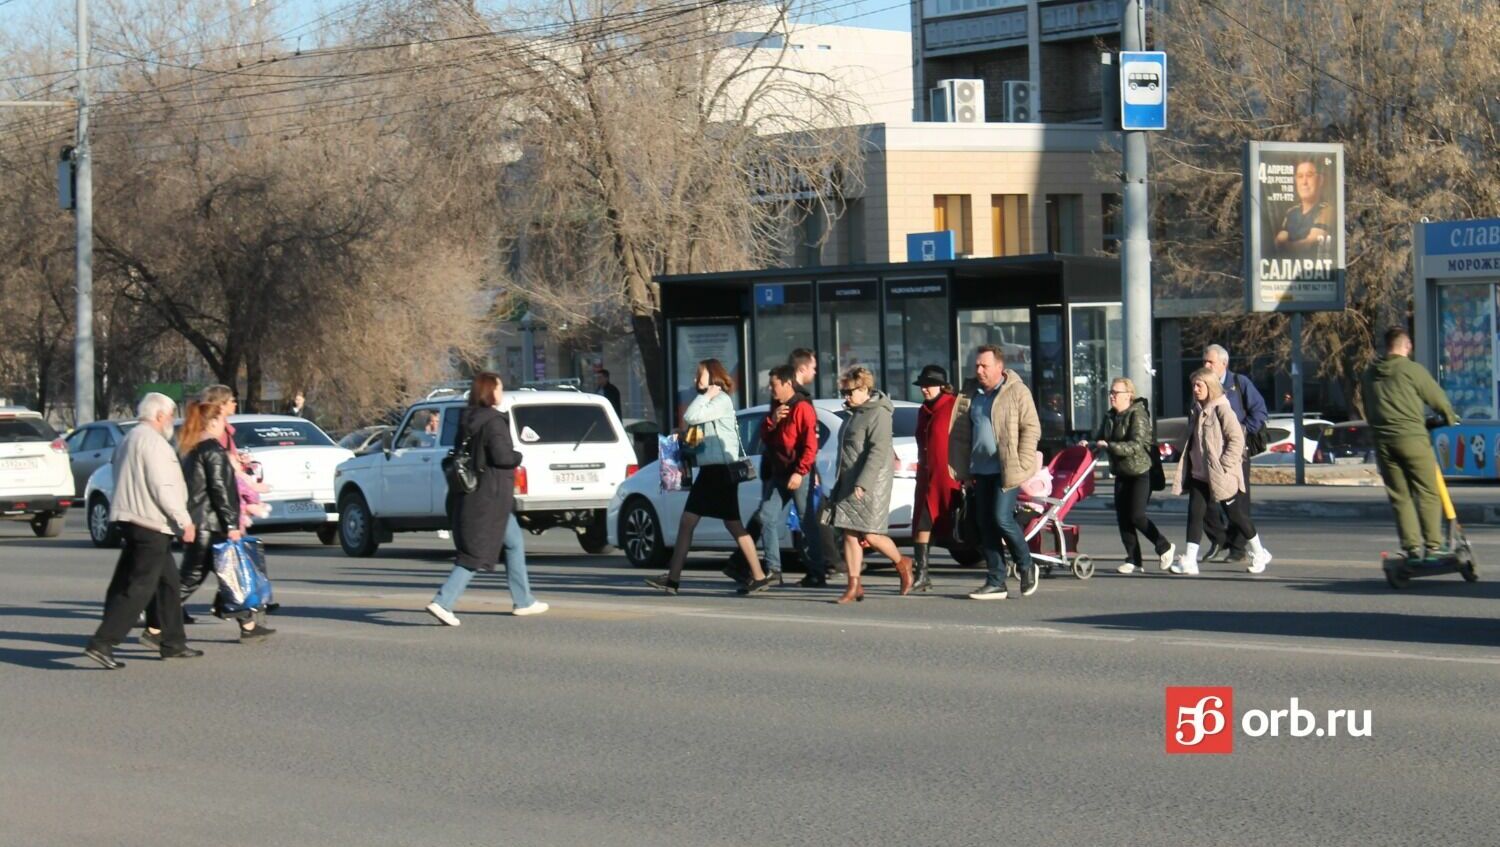 Оренбуржцы гуляют на улицах города